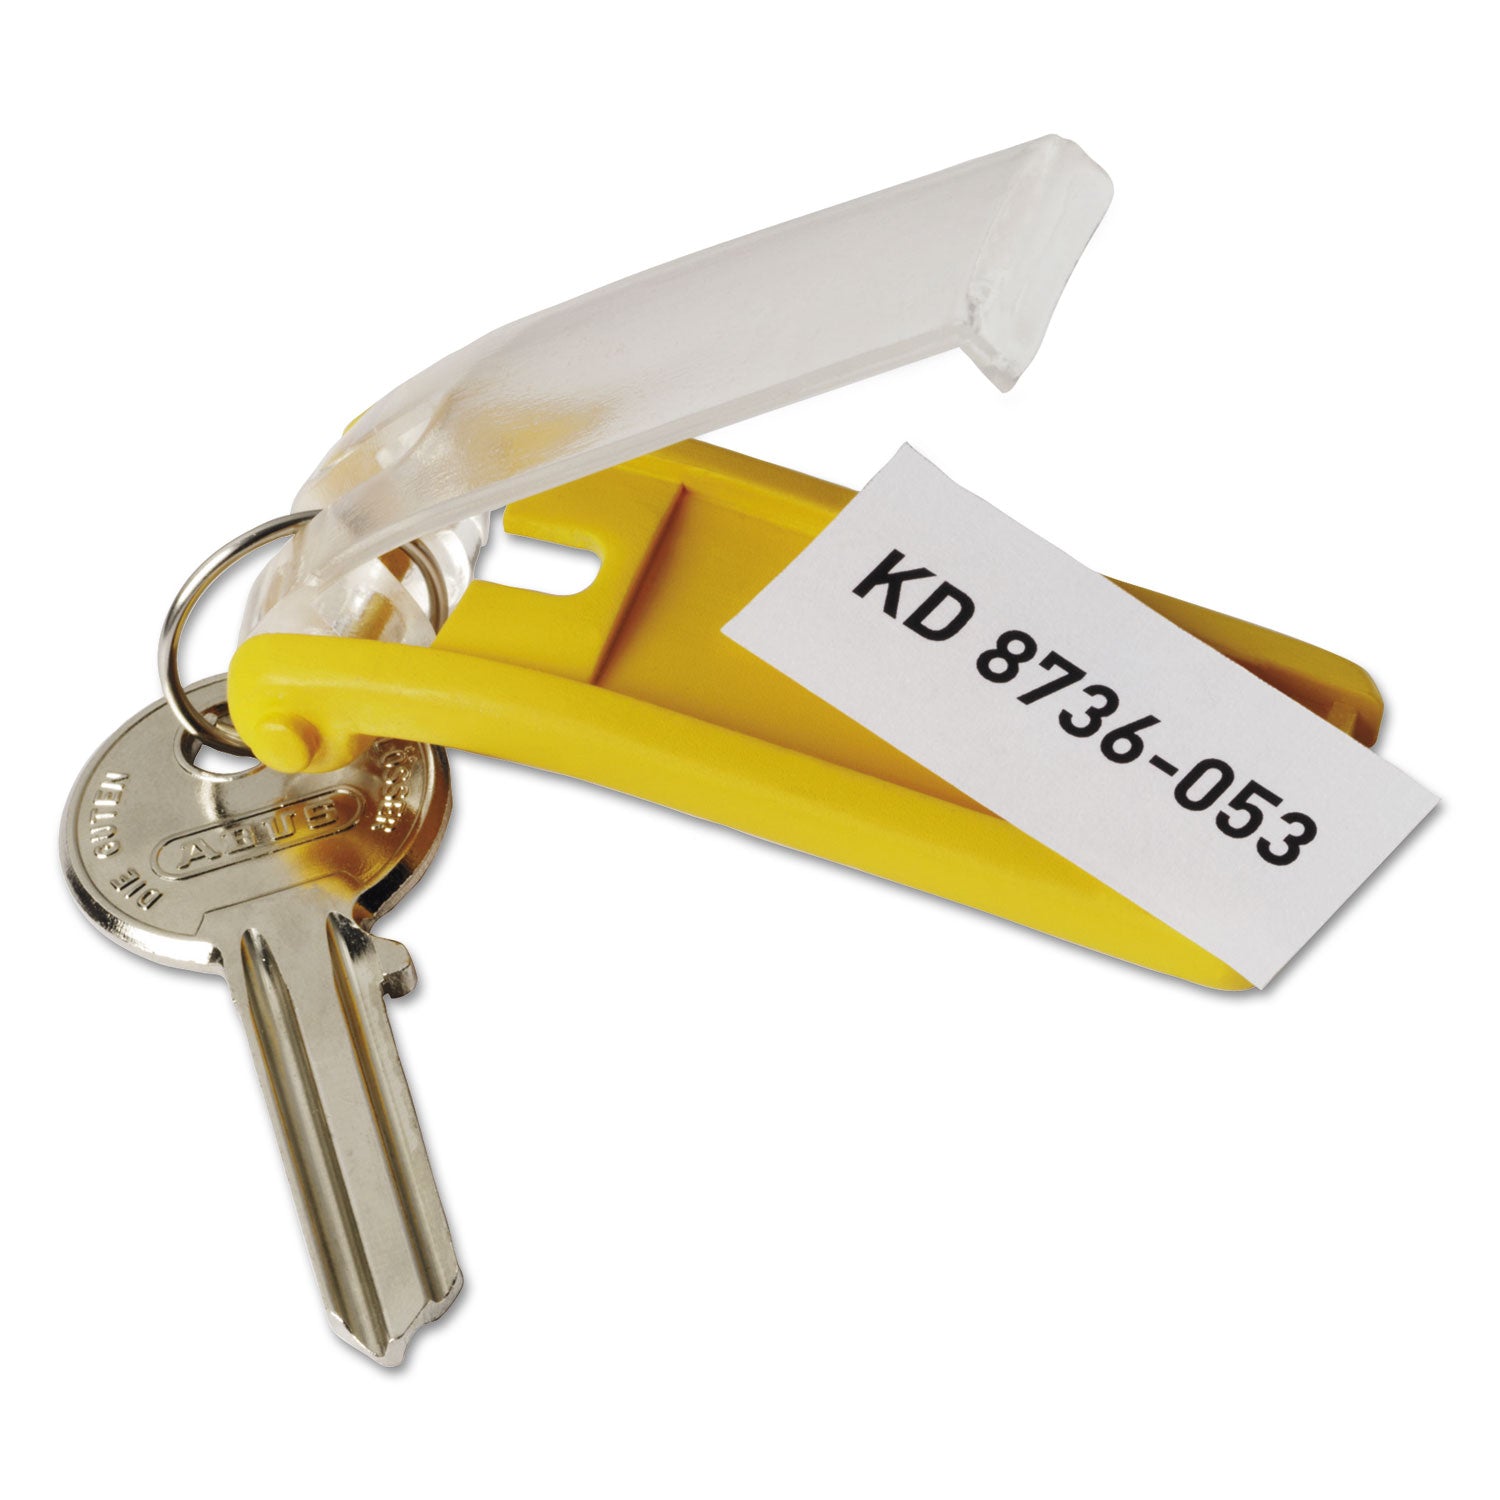 Key Tags for Locking Key Cabinets, Plastic, 1.13 x 2.75, Black, 6/Pack - 